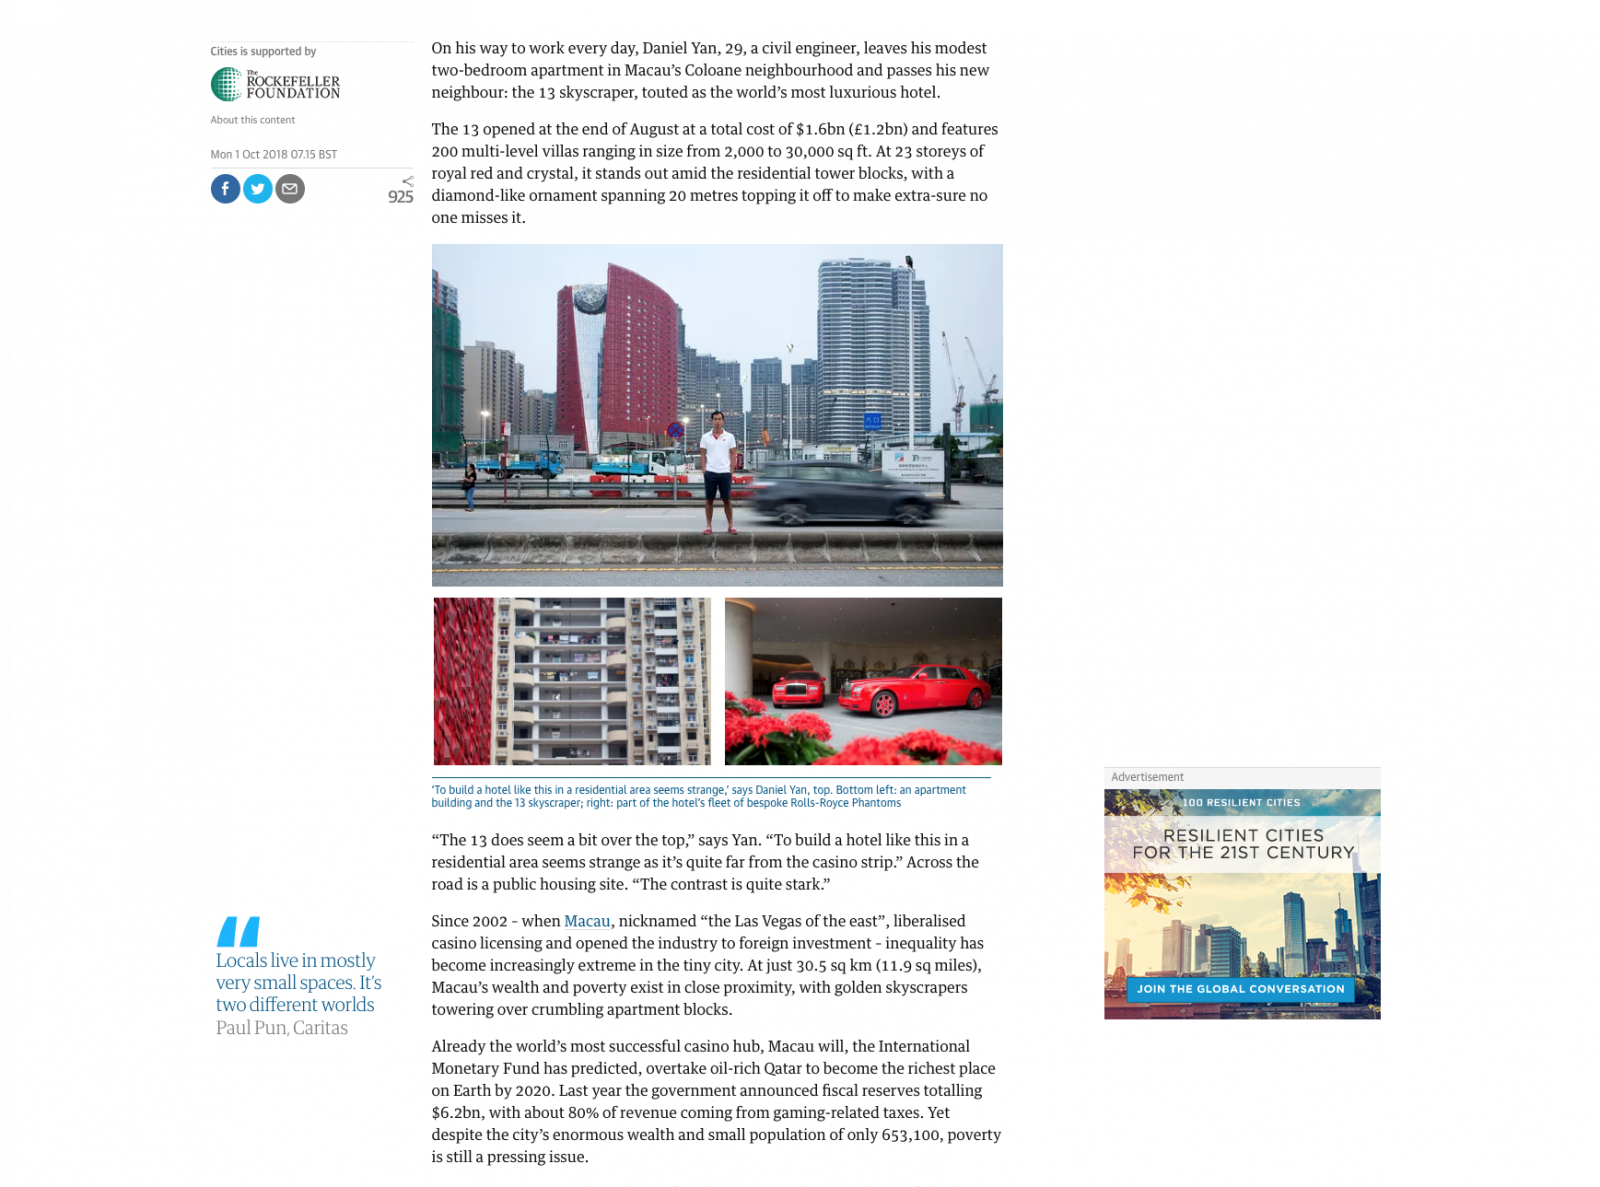 Multibillion-dollar Macau: a city of glitz and grit "“ photo essay - 